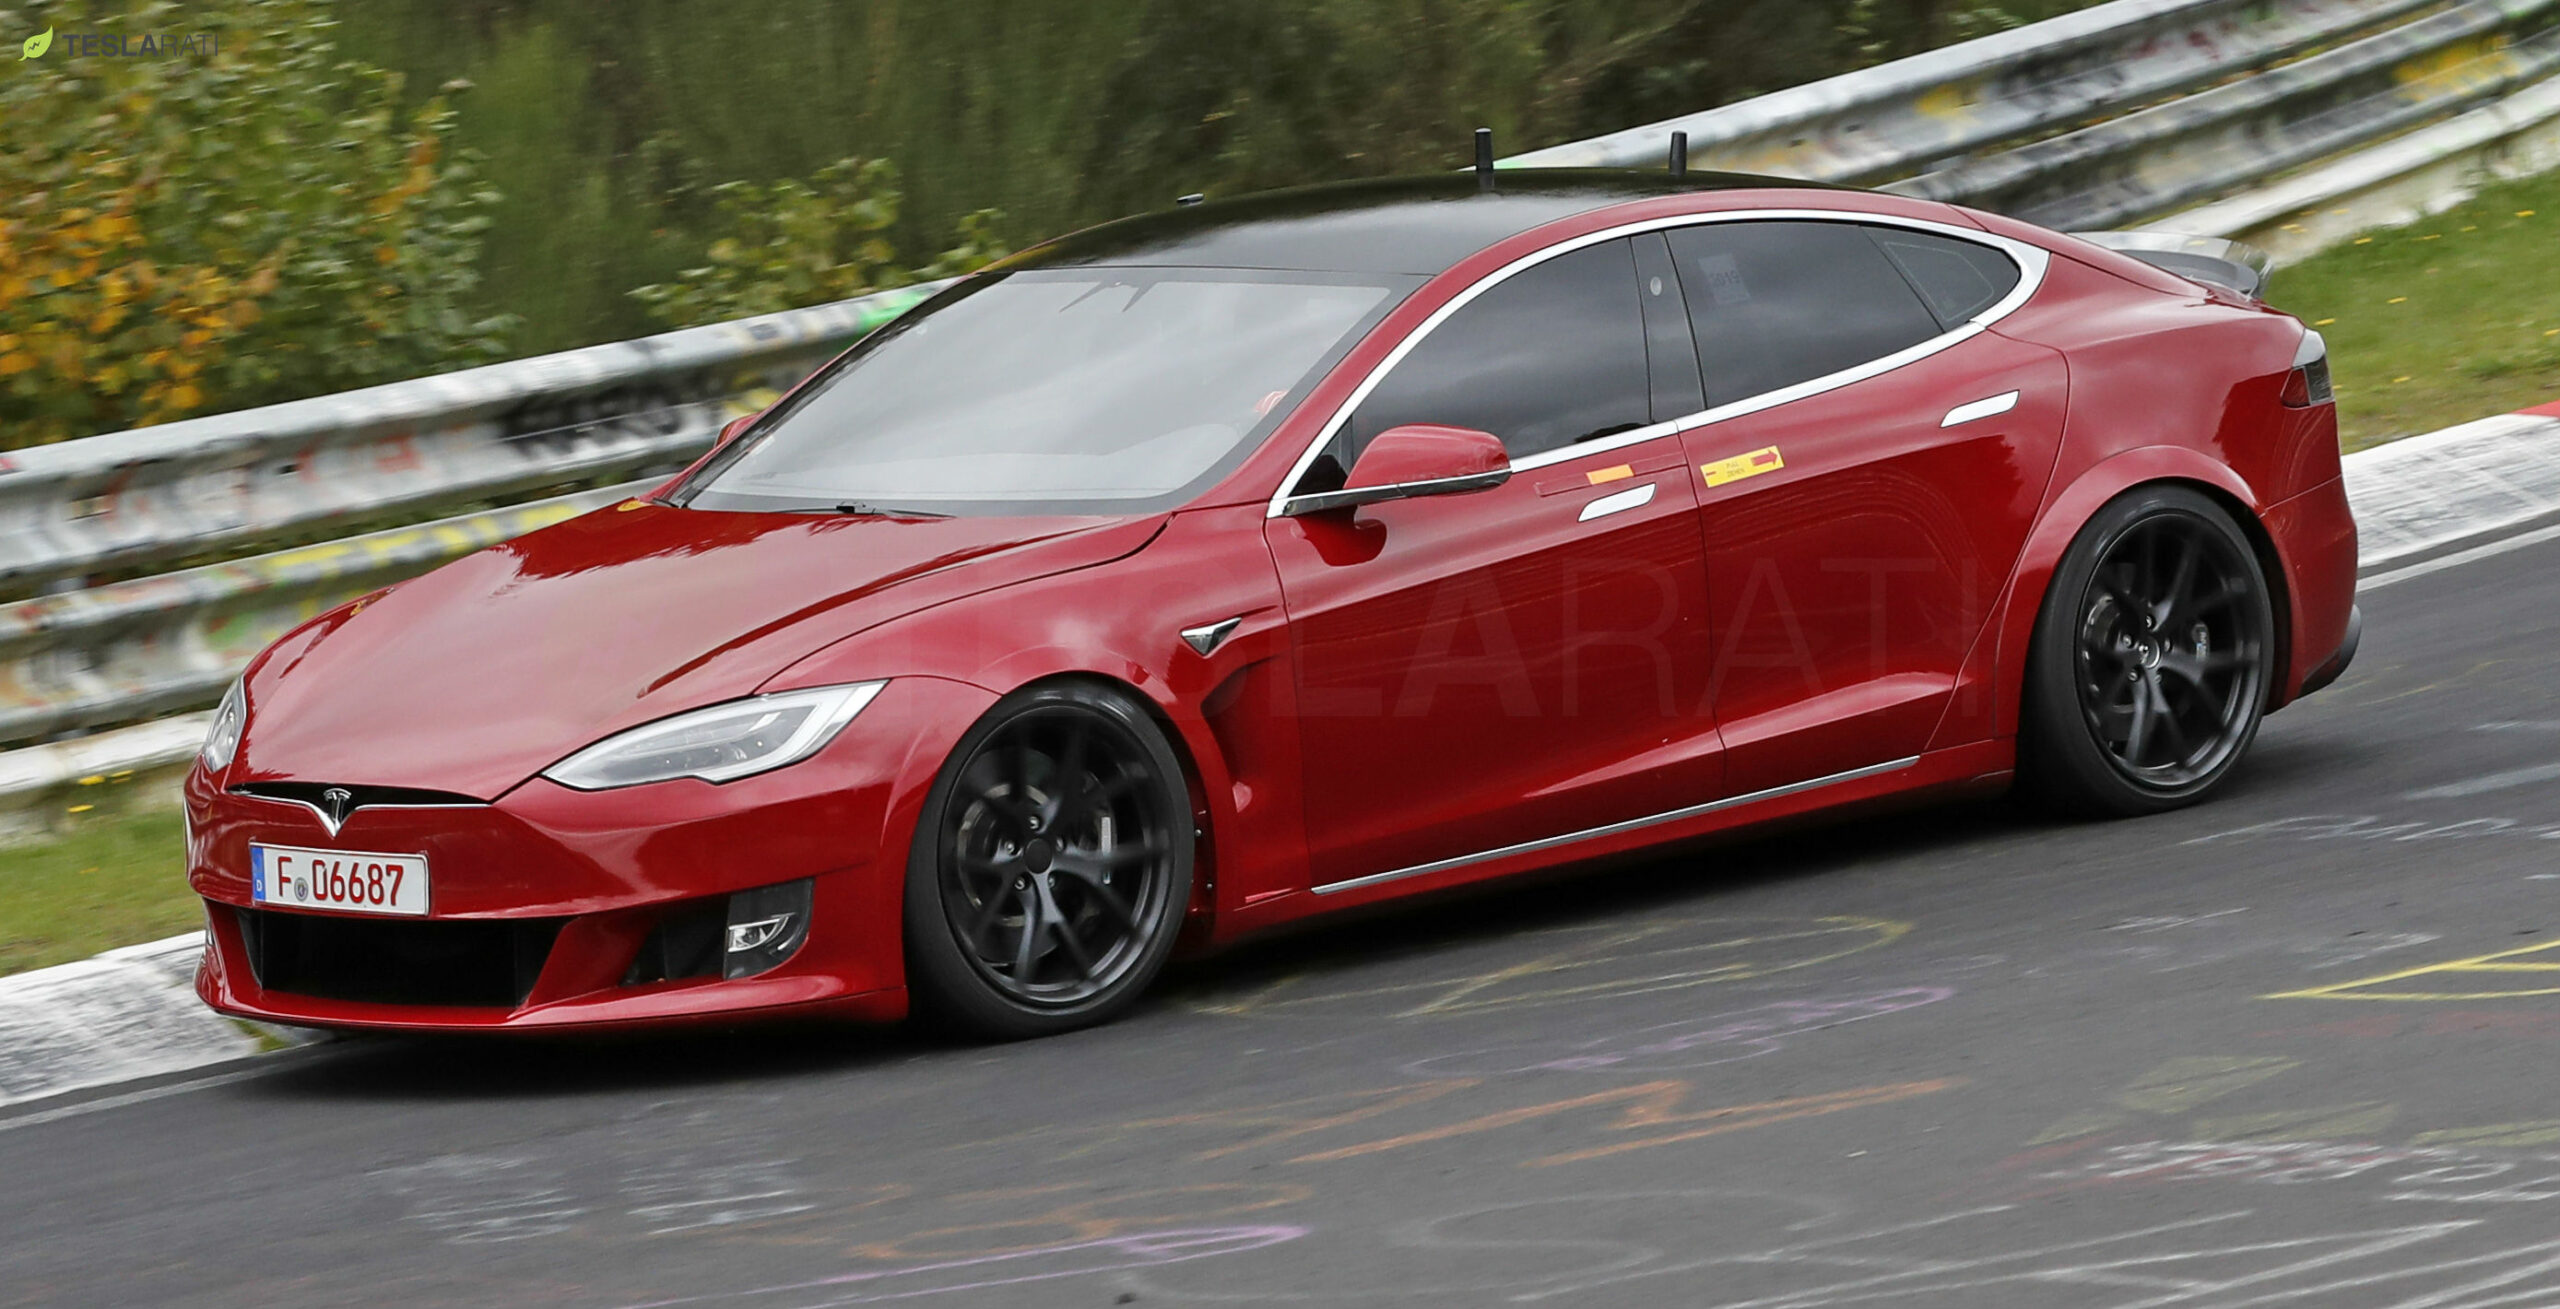 Tesla Model S Plaid last release date officially declared by Elon Musk